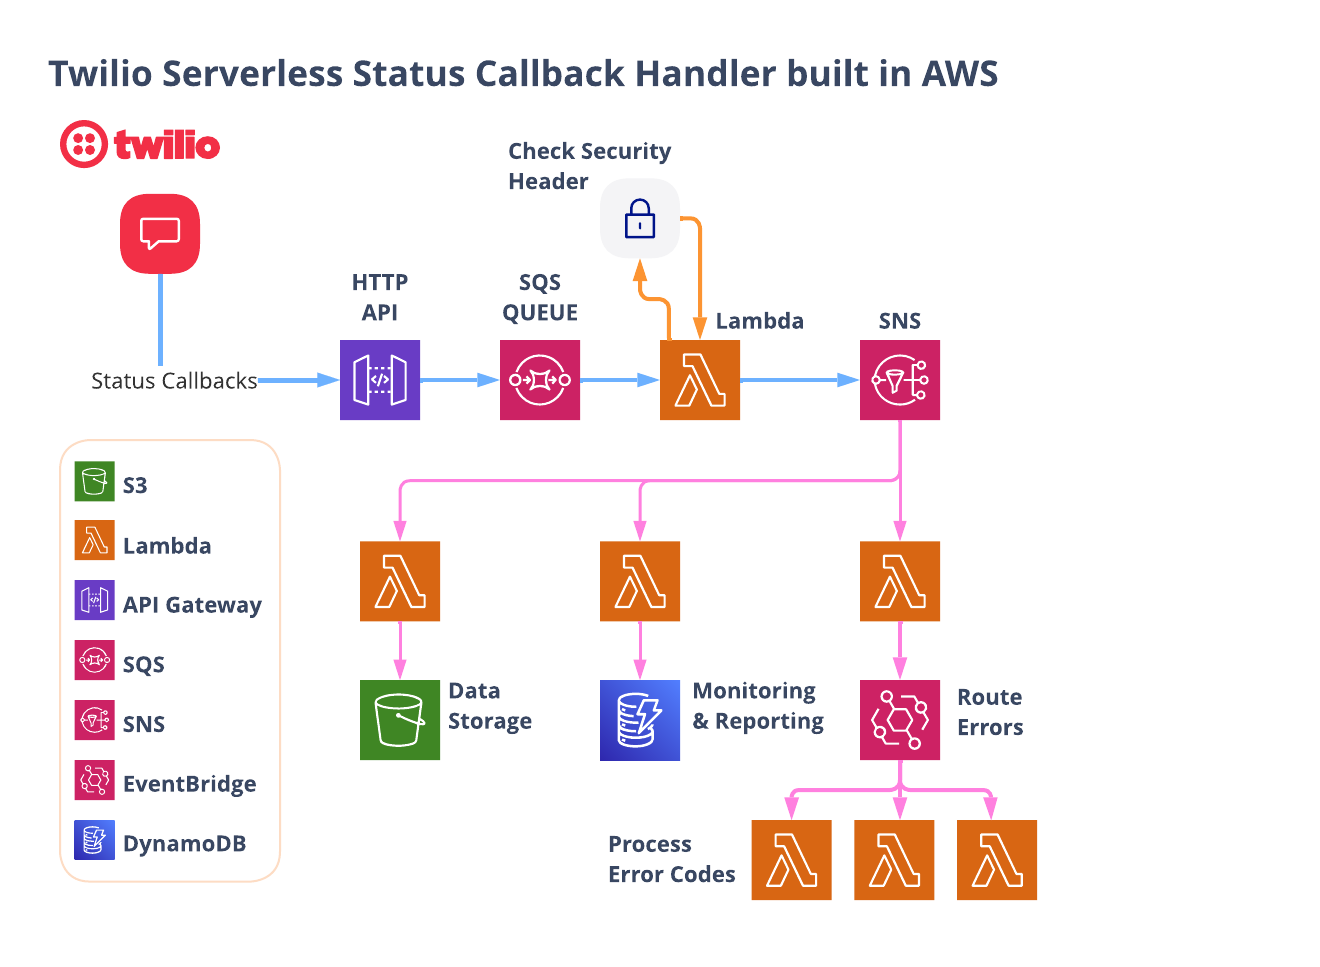 Status Callback handler serverless in AWS architecture